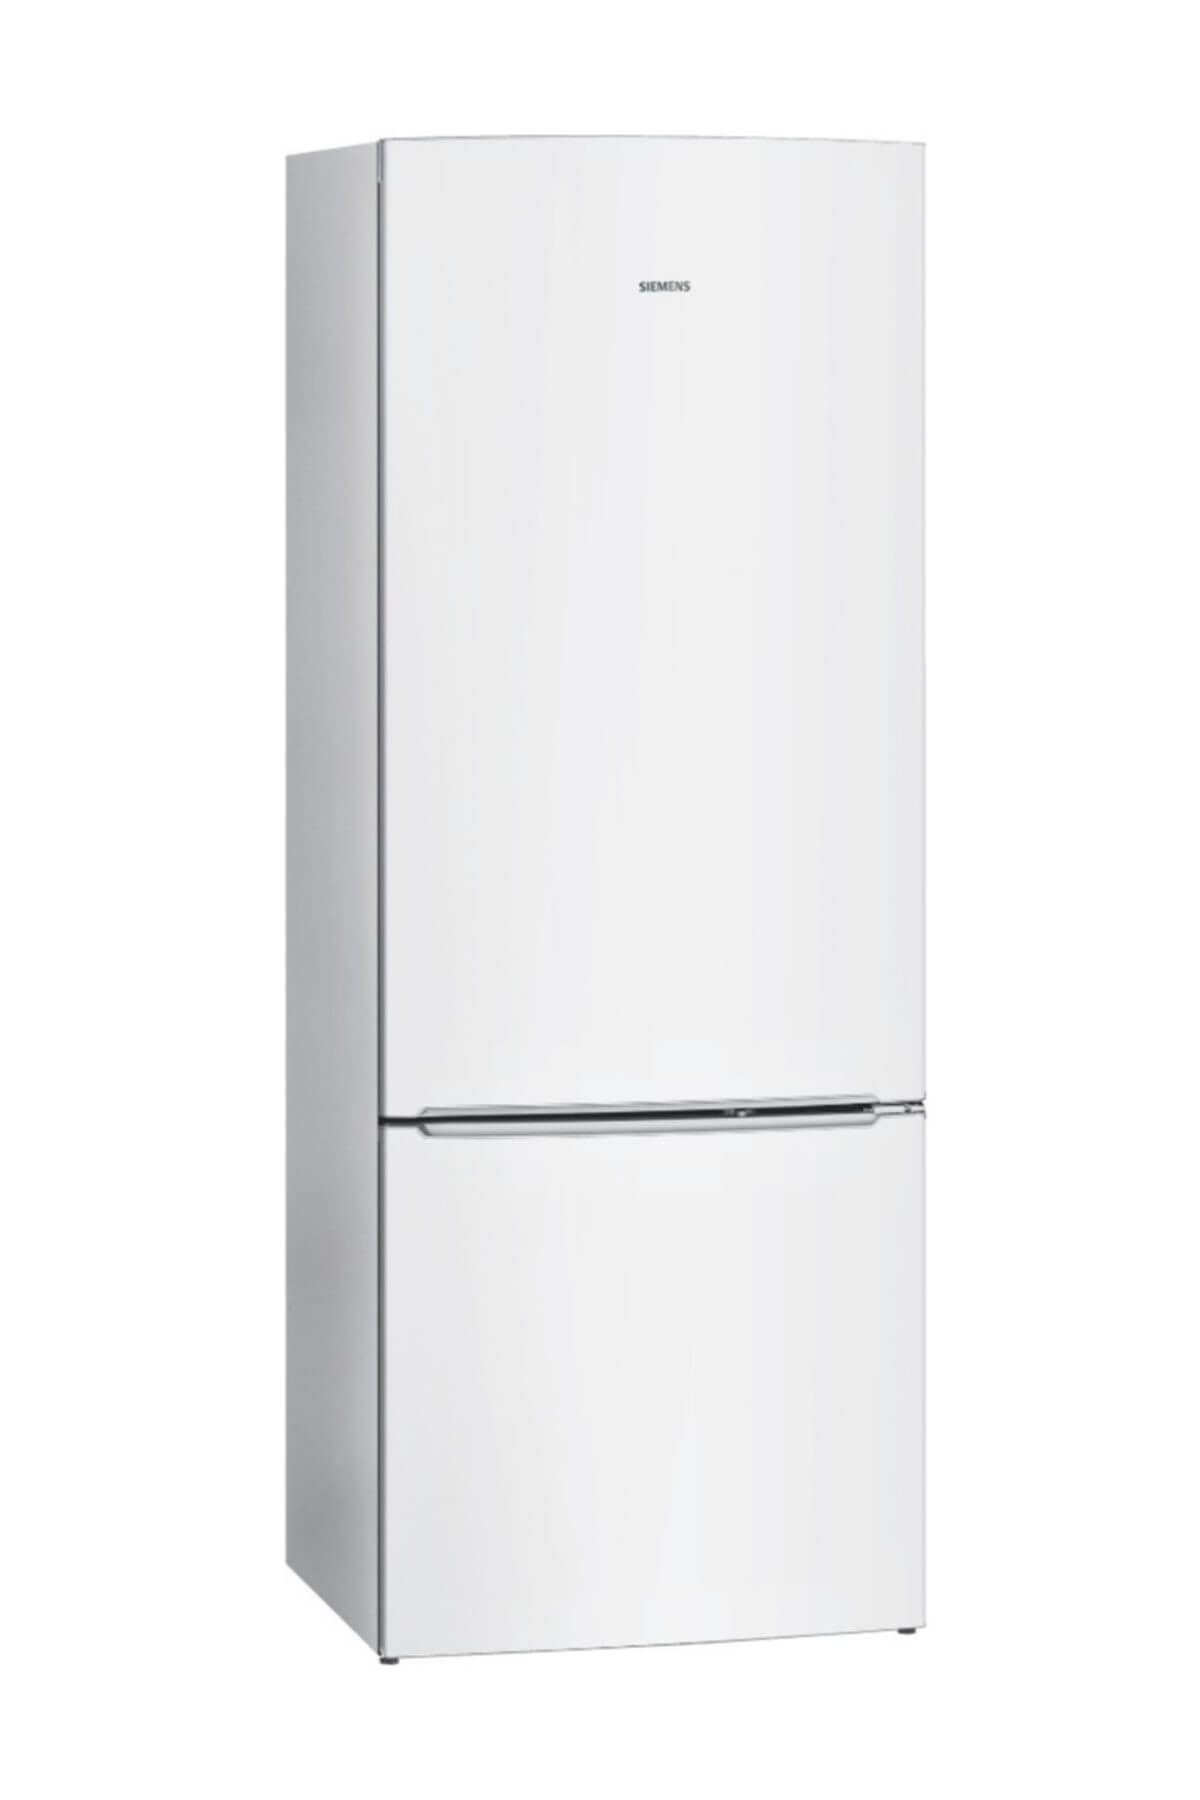 Siemens KG57NVW22N A+ Kombi No-Frost Buzdolabı